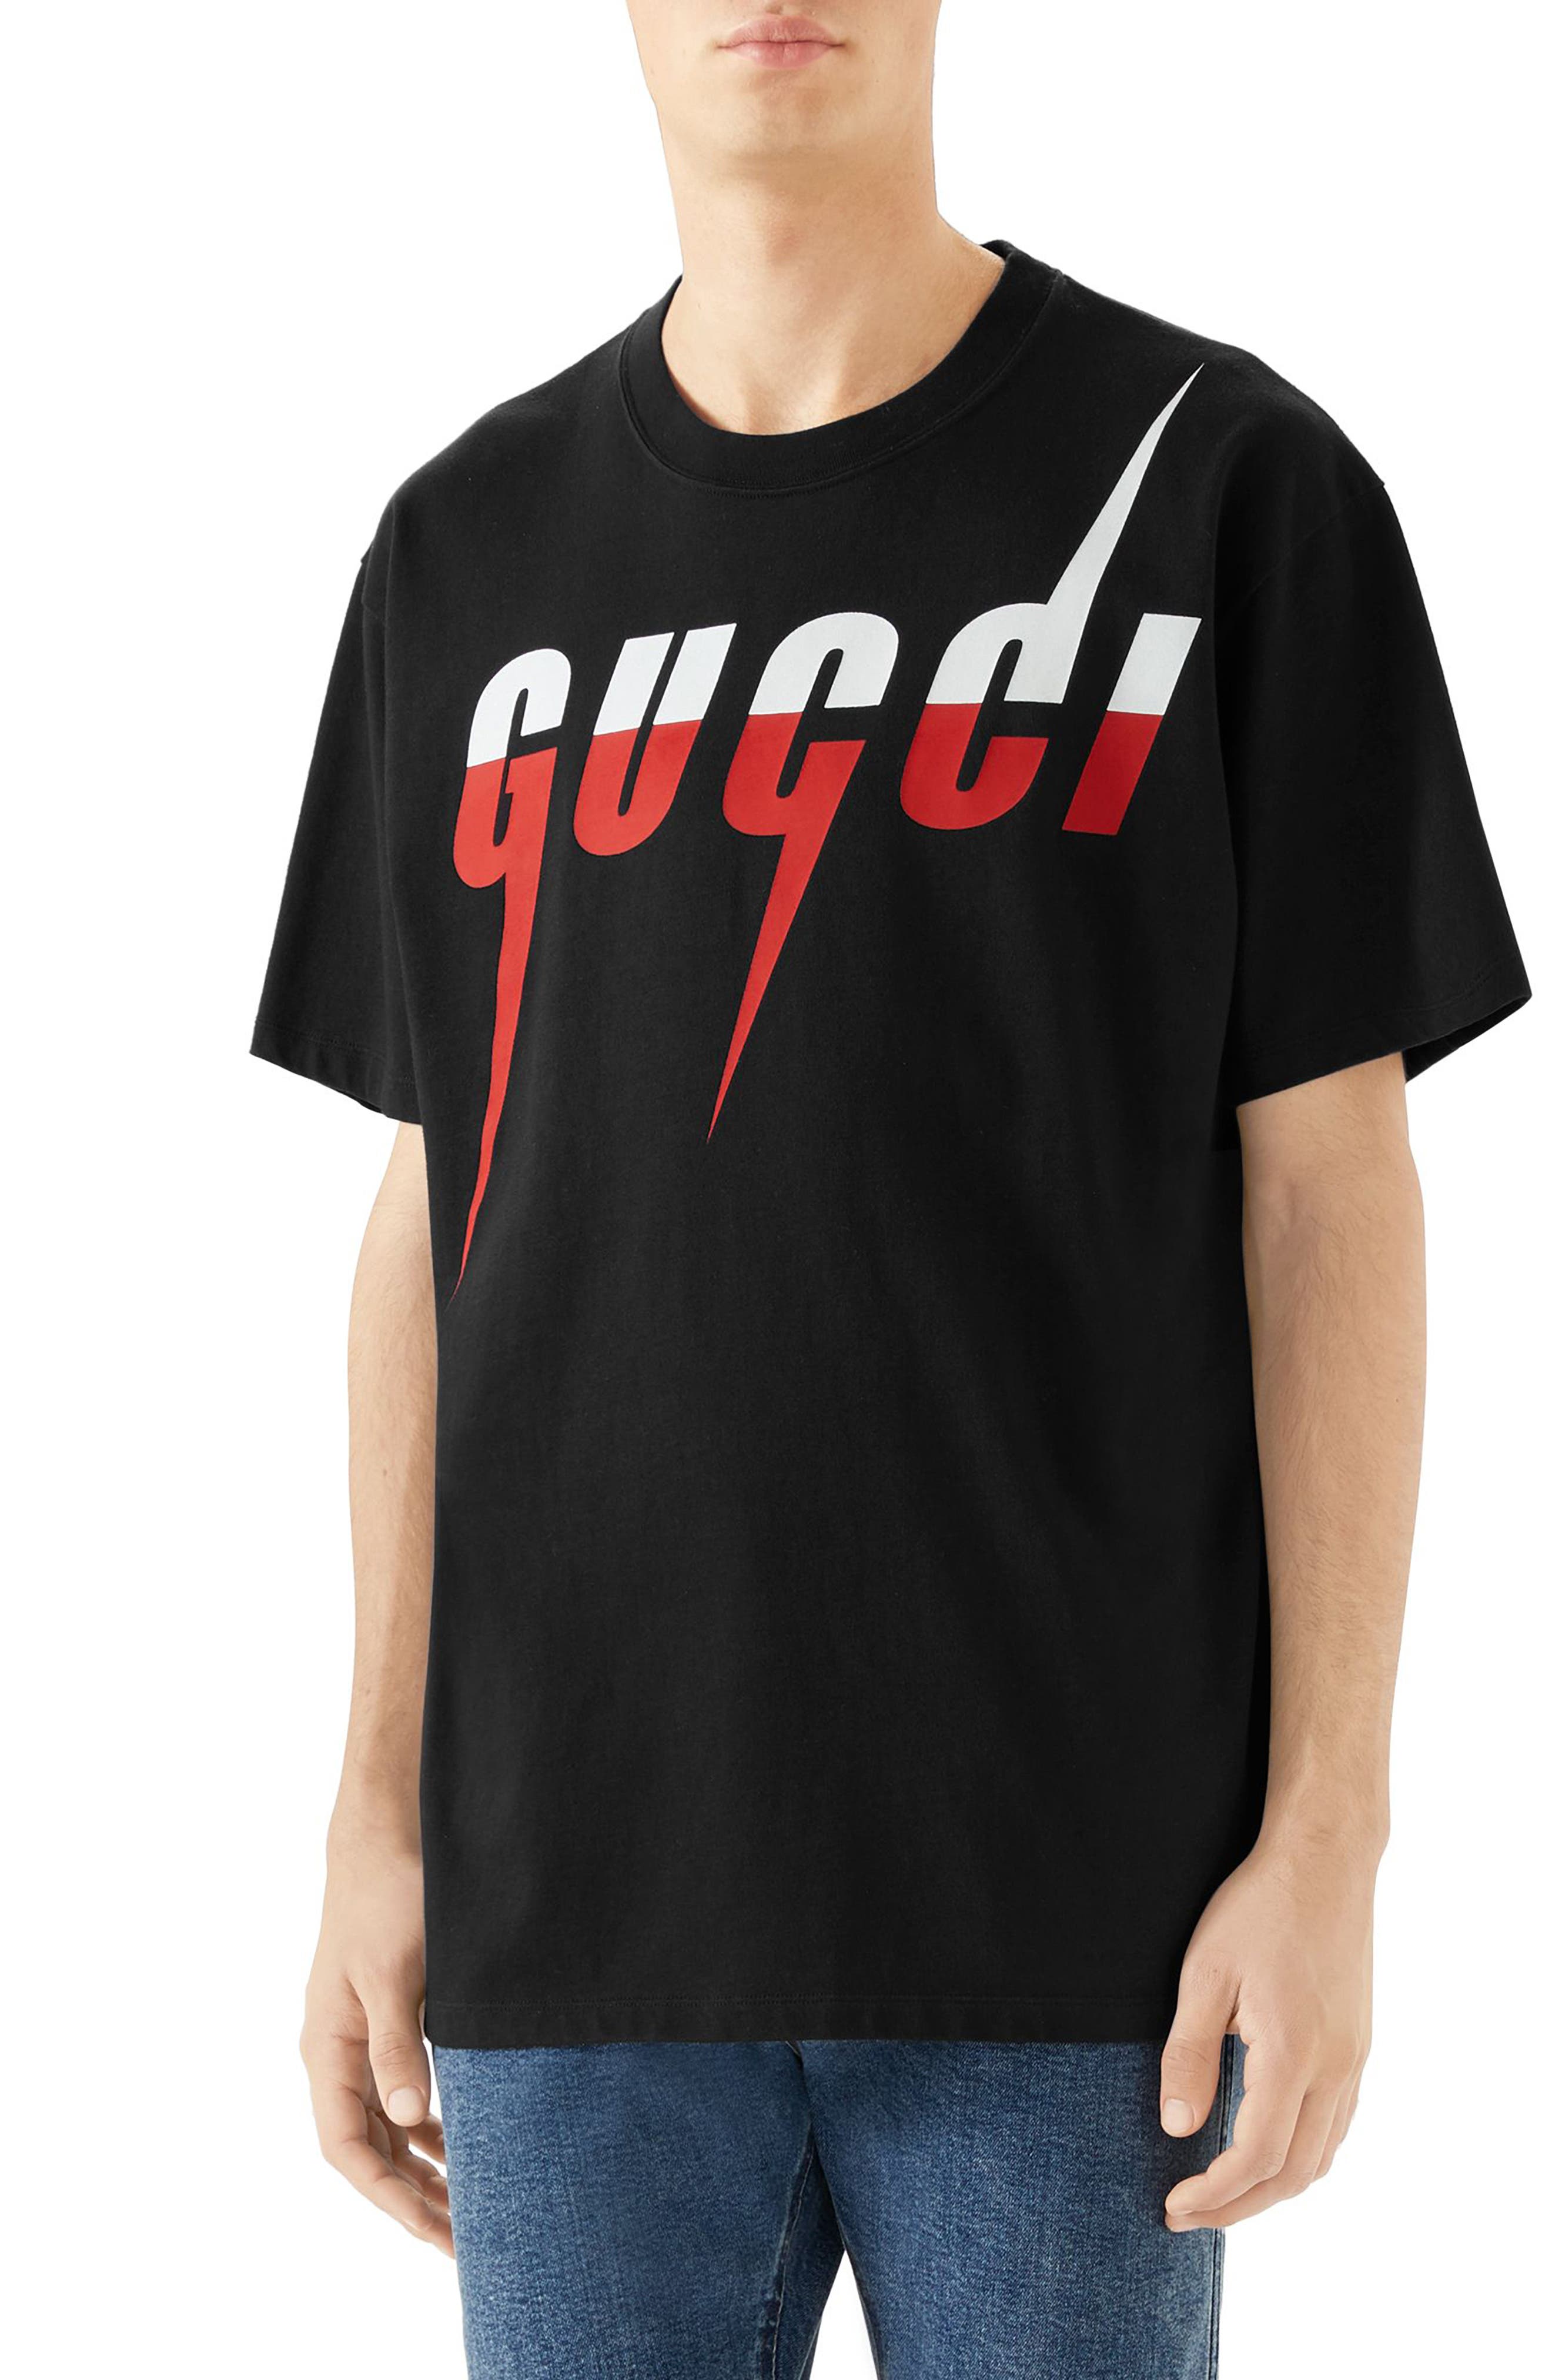 gucci shirt nordstrom rack, OFF 71%,Buy!